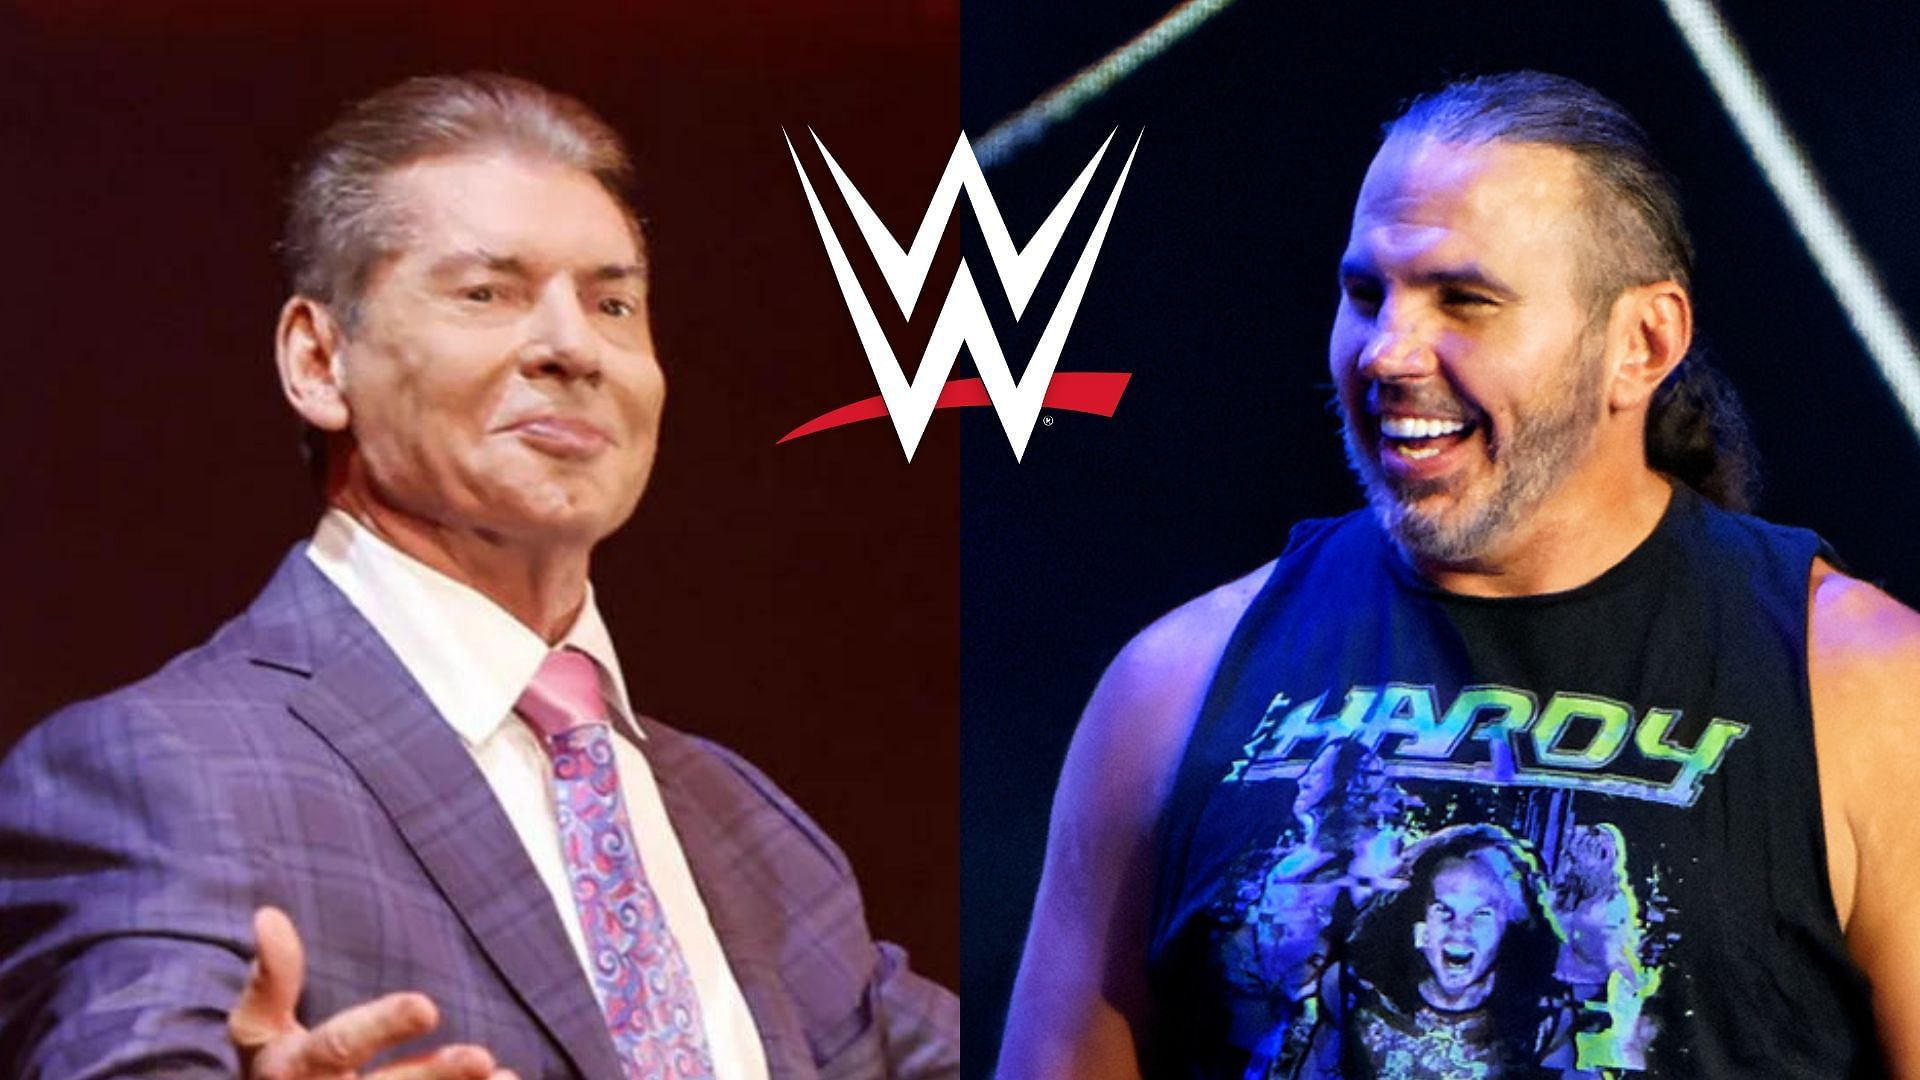 Matt Hardy has reacted to Vince McMahon